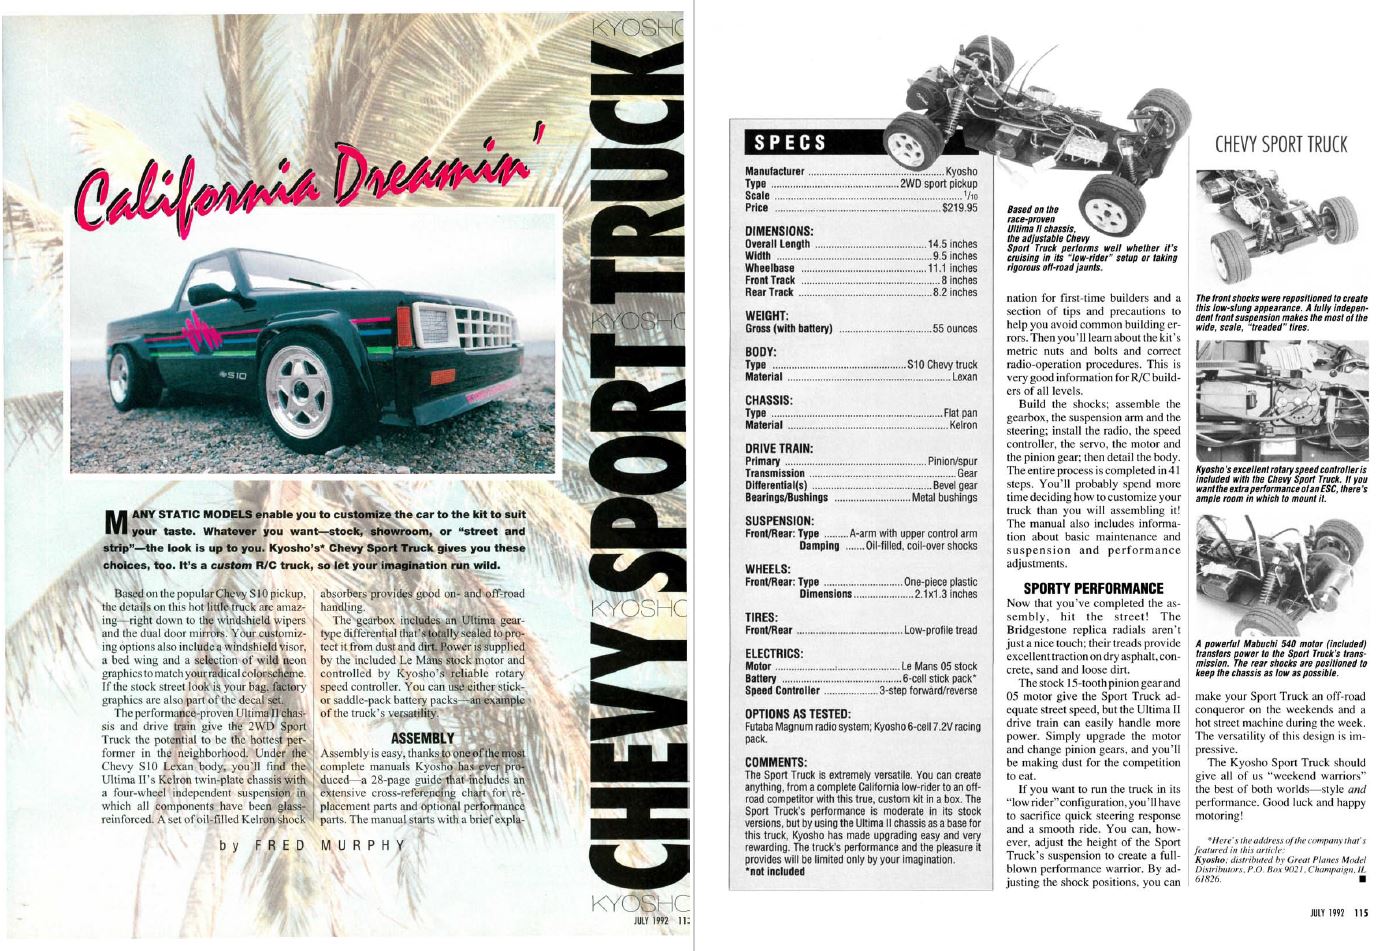 Kyosho Chevy Sport Truck July 92 2